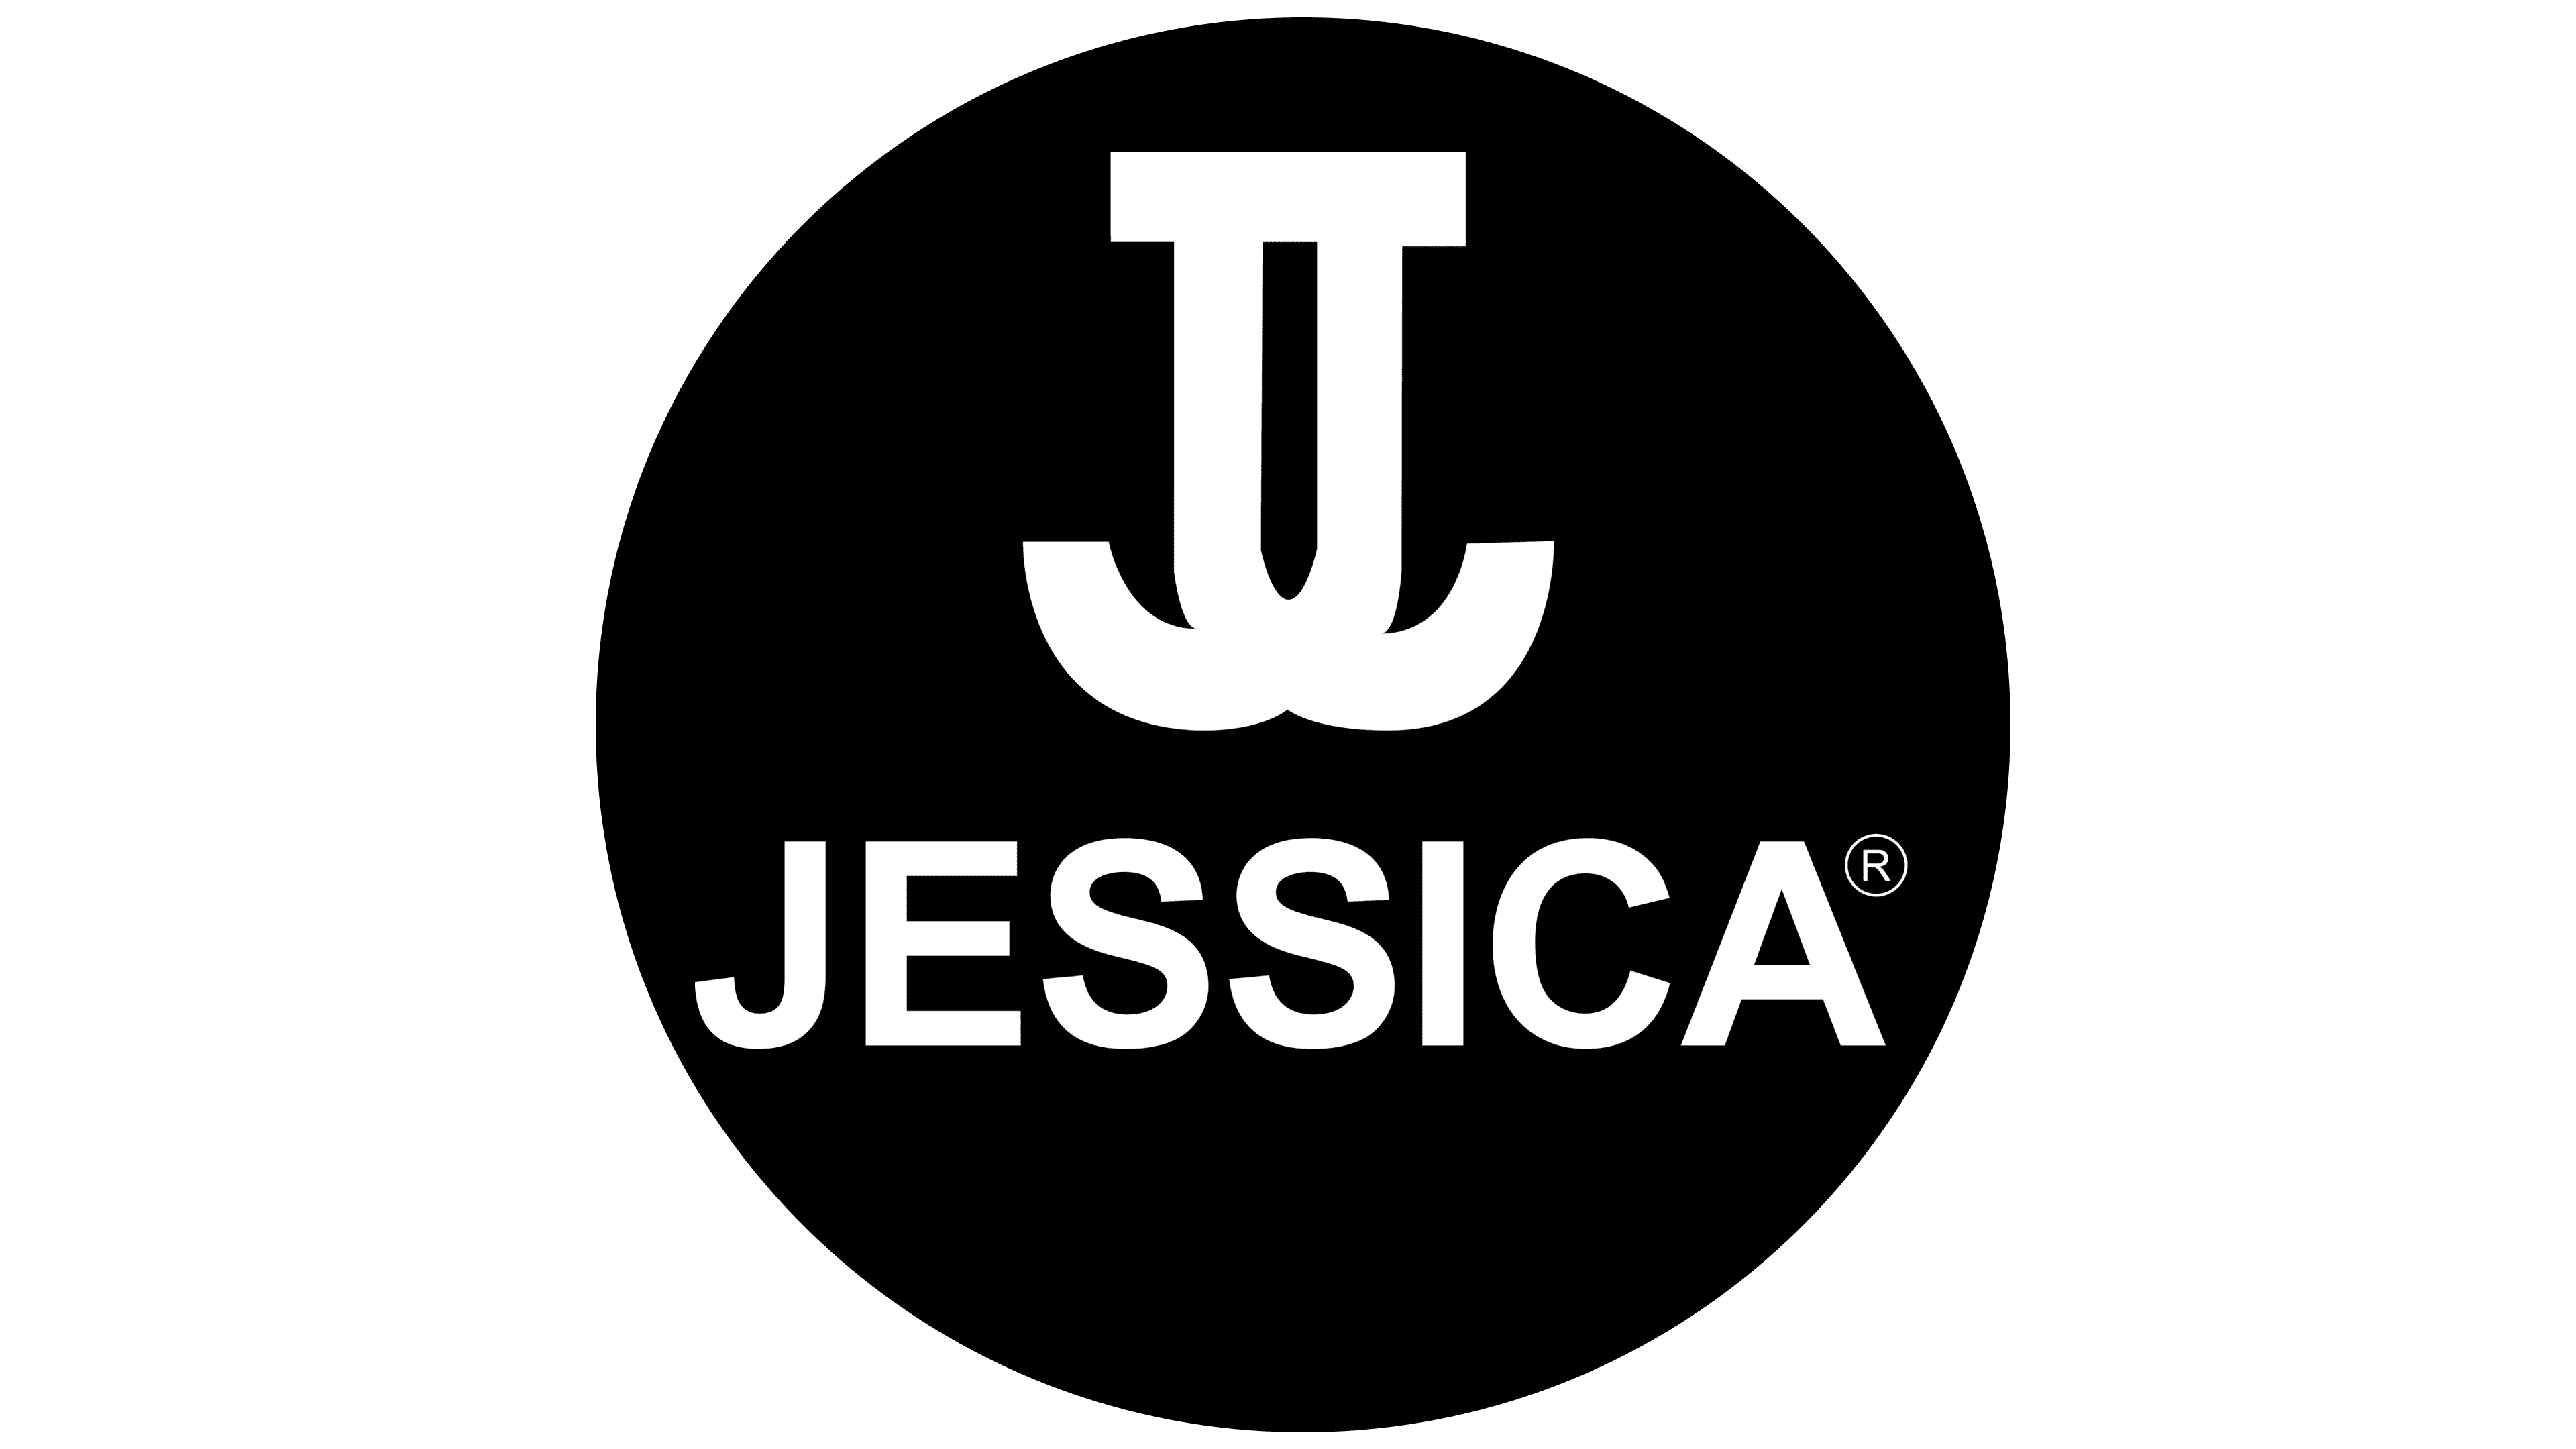 Details 145+ jessica logo best - camera.edu.vn